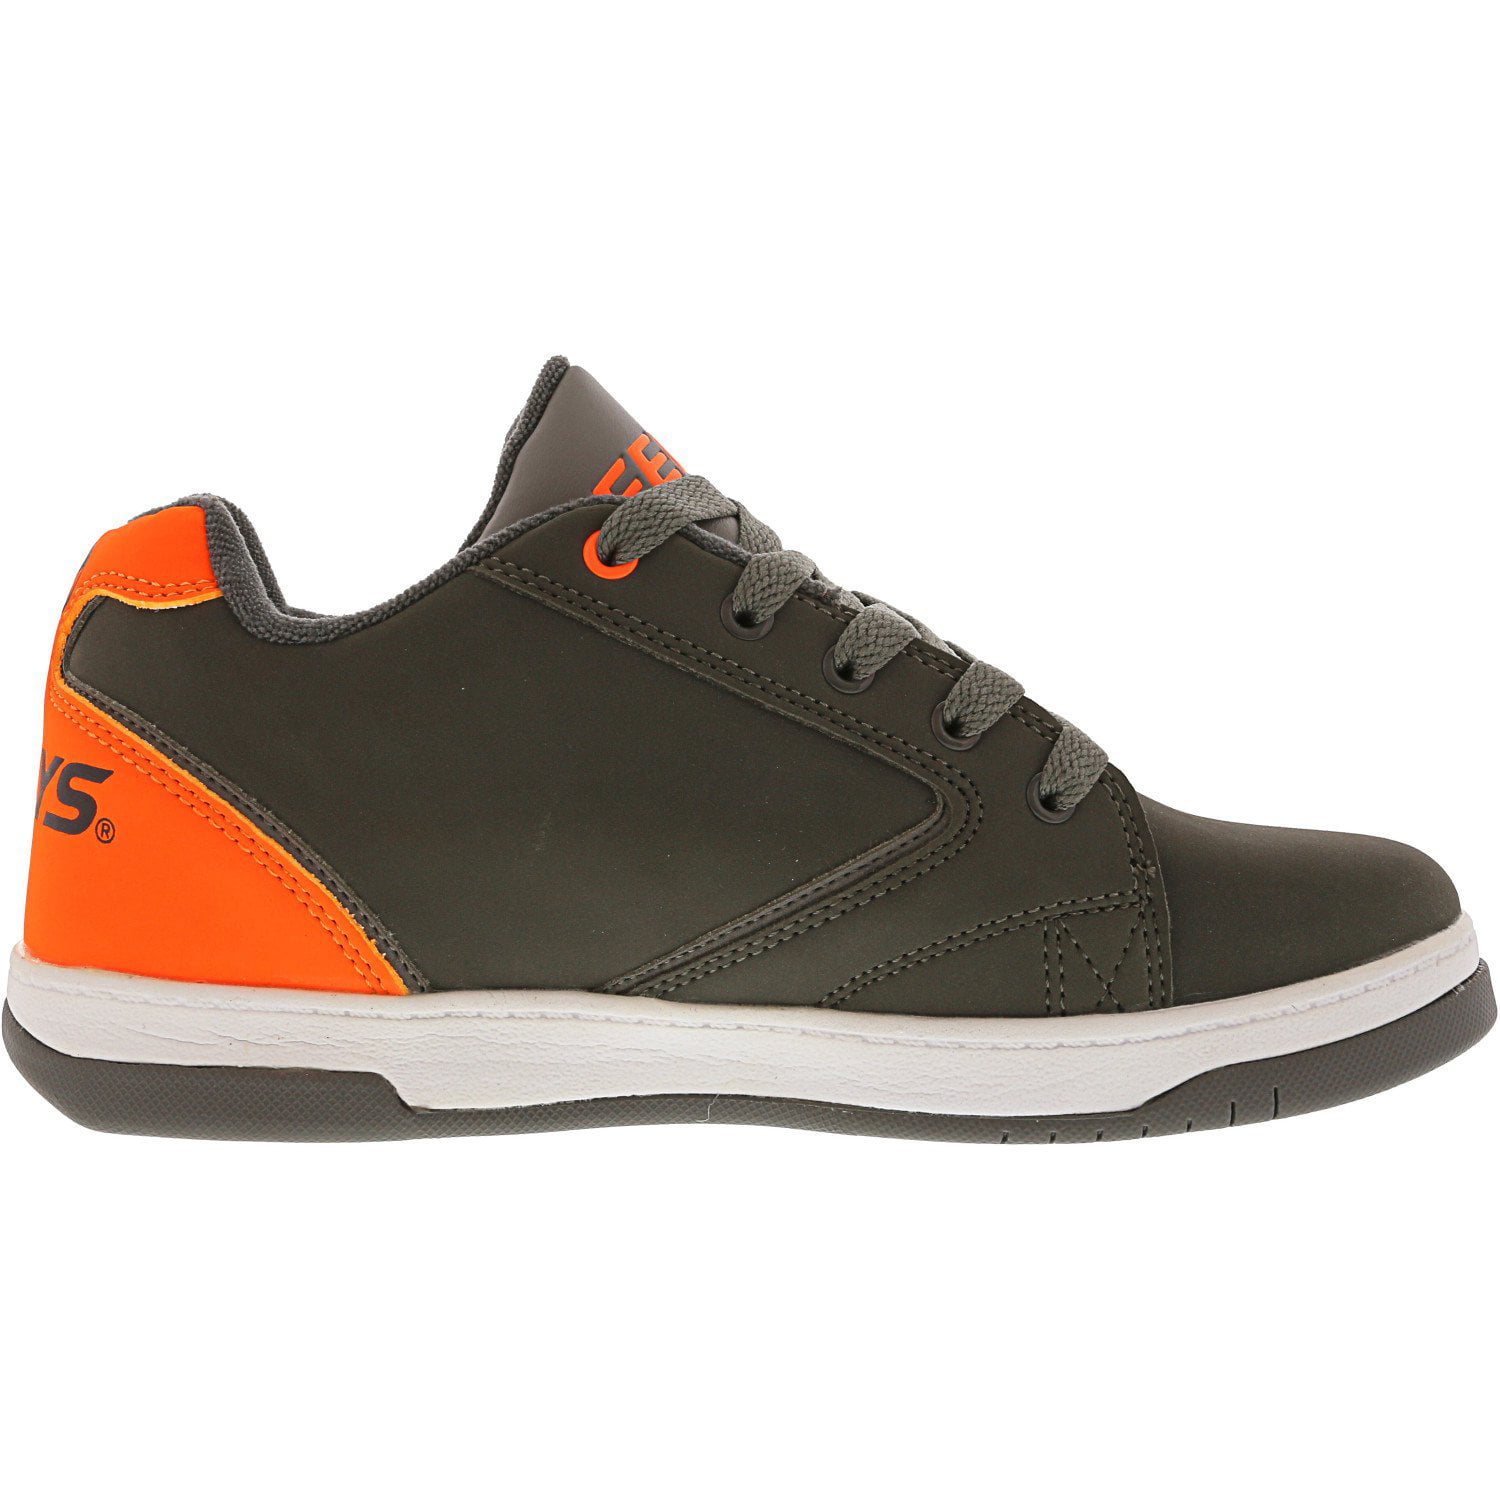 Heelys Heelys Propel 2.0 Skate Shoes Charcole and Neon Orange Shoes 770975  Size 8 